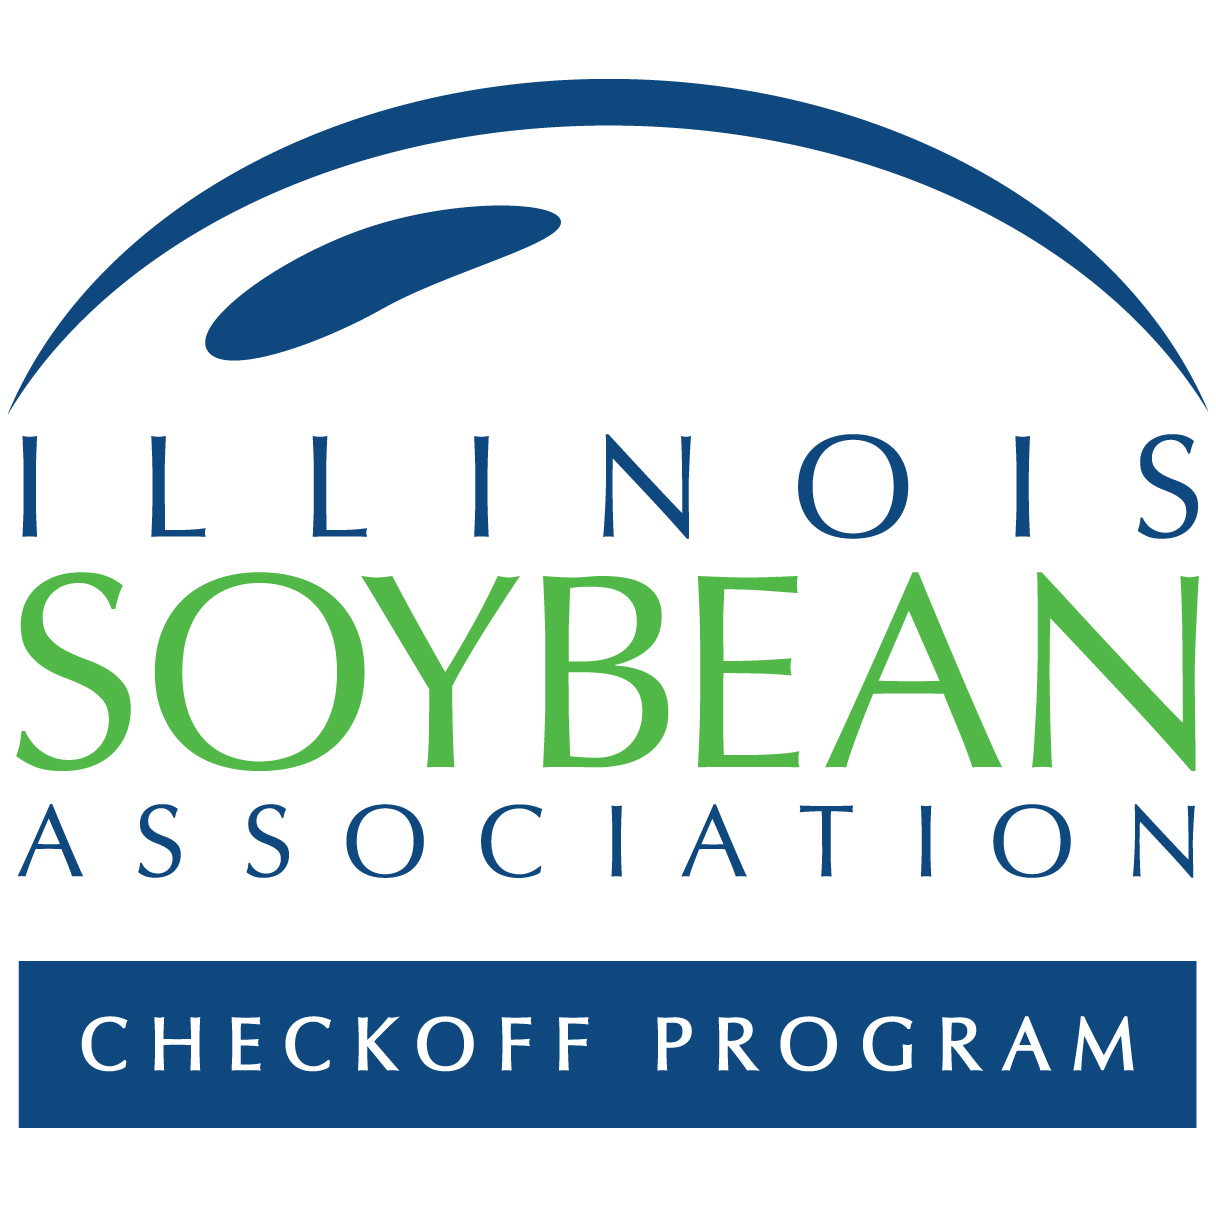 Illinois Soybean Association